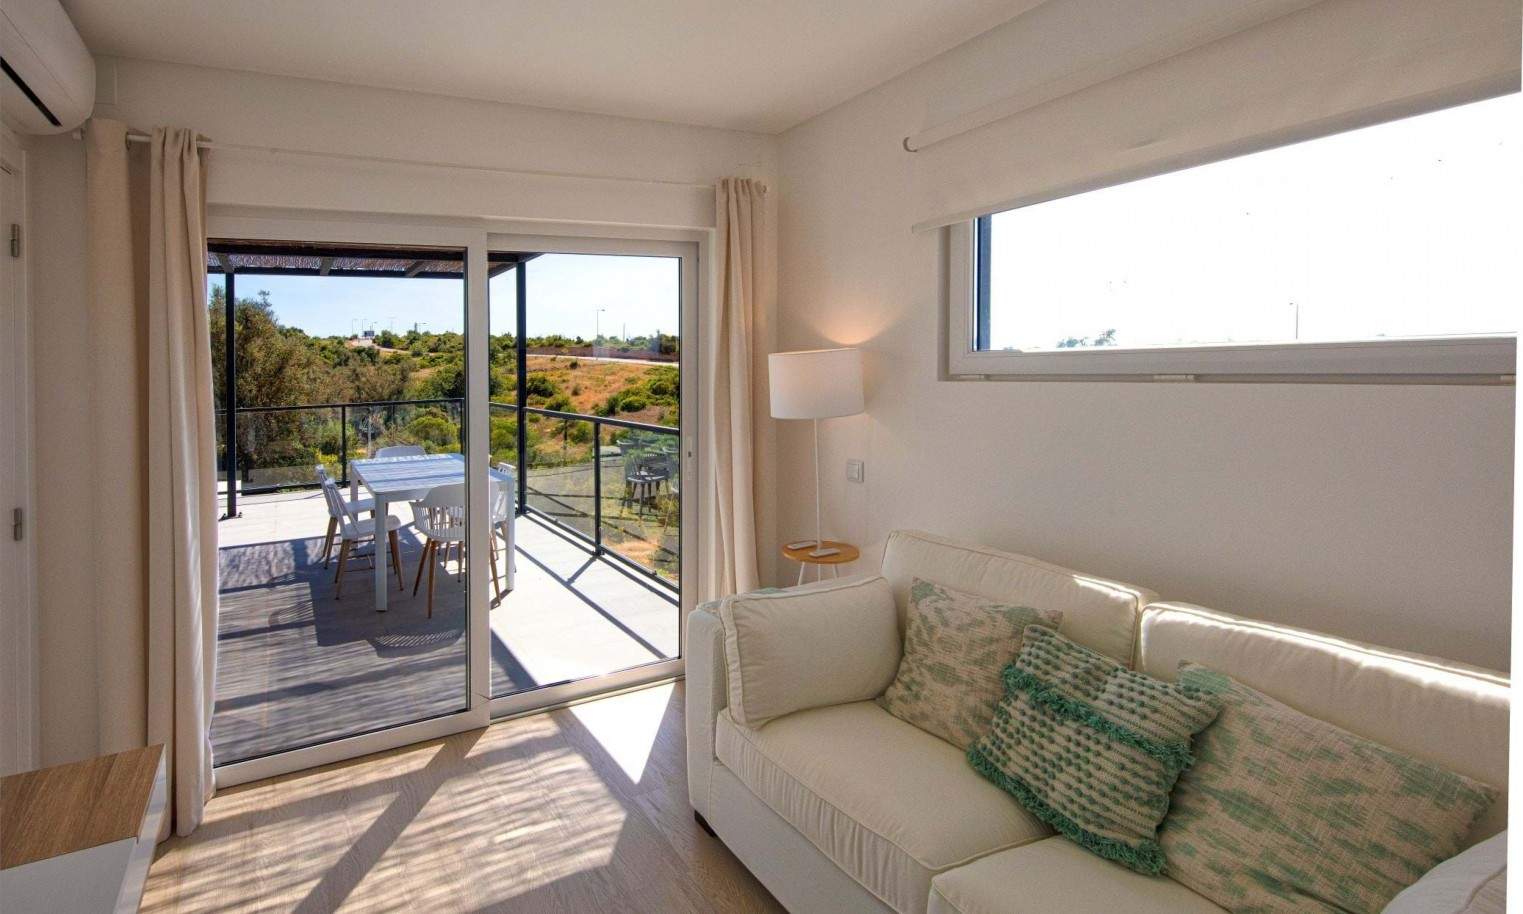 2+1 bedroom villa in resort, for sale in Carvoeiro, Algarve_204879